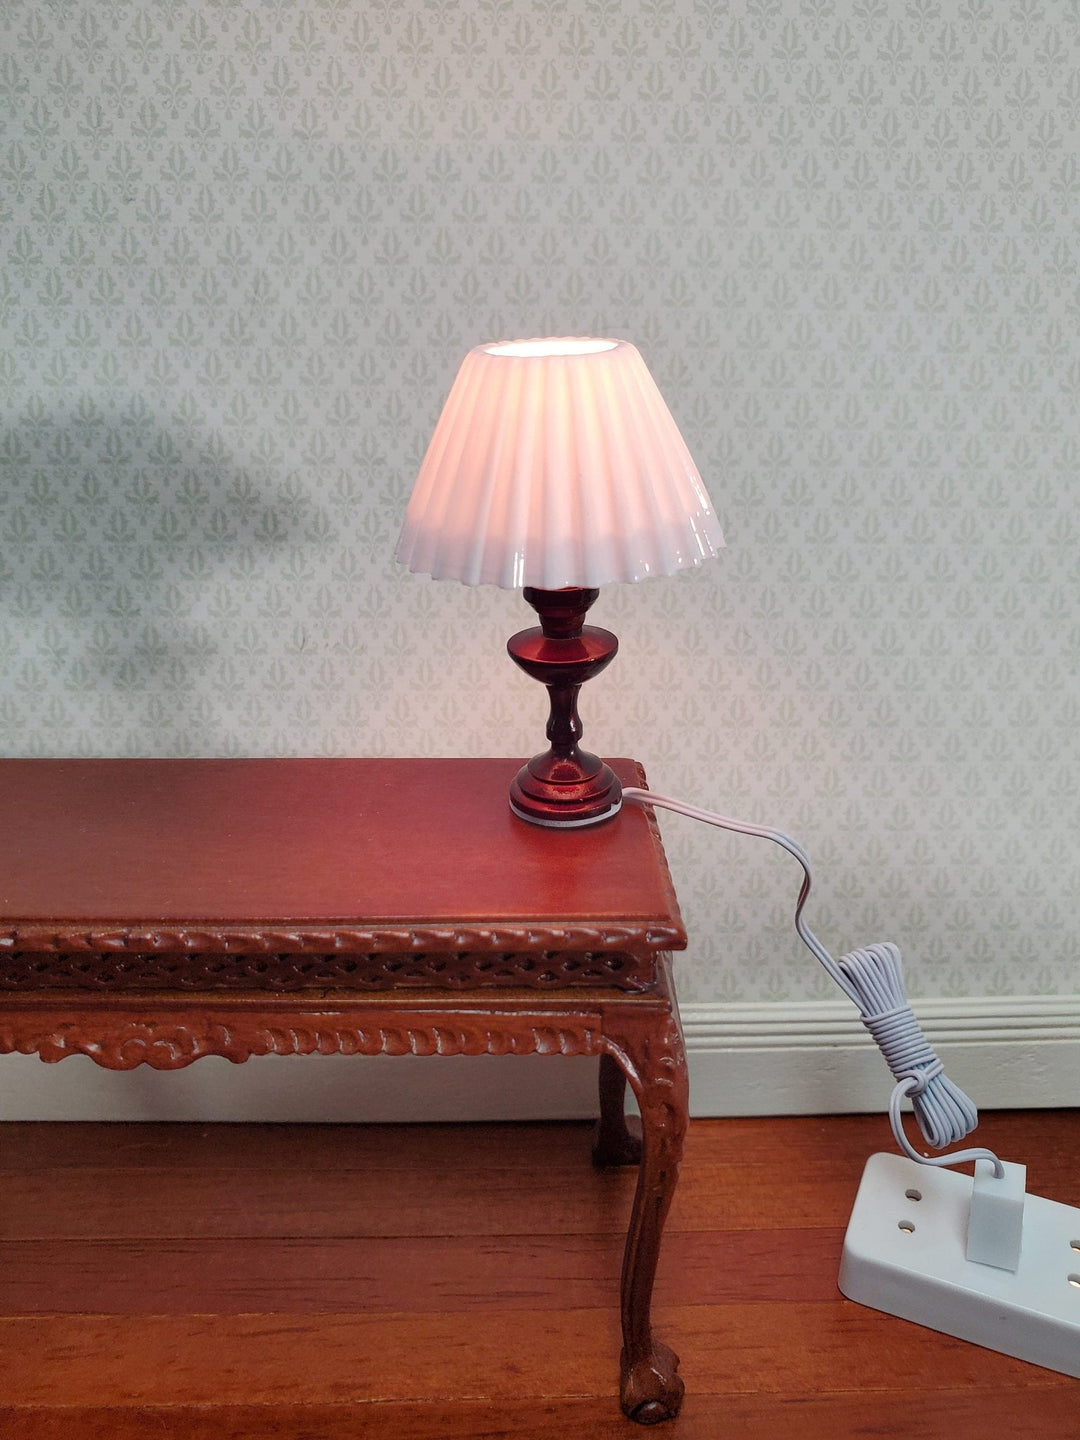 Dollhouse Miniature Table Lamp White Shade Bronze Base 1:12 Scale 12 volt with Plug - Miniature Crush